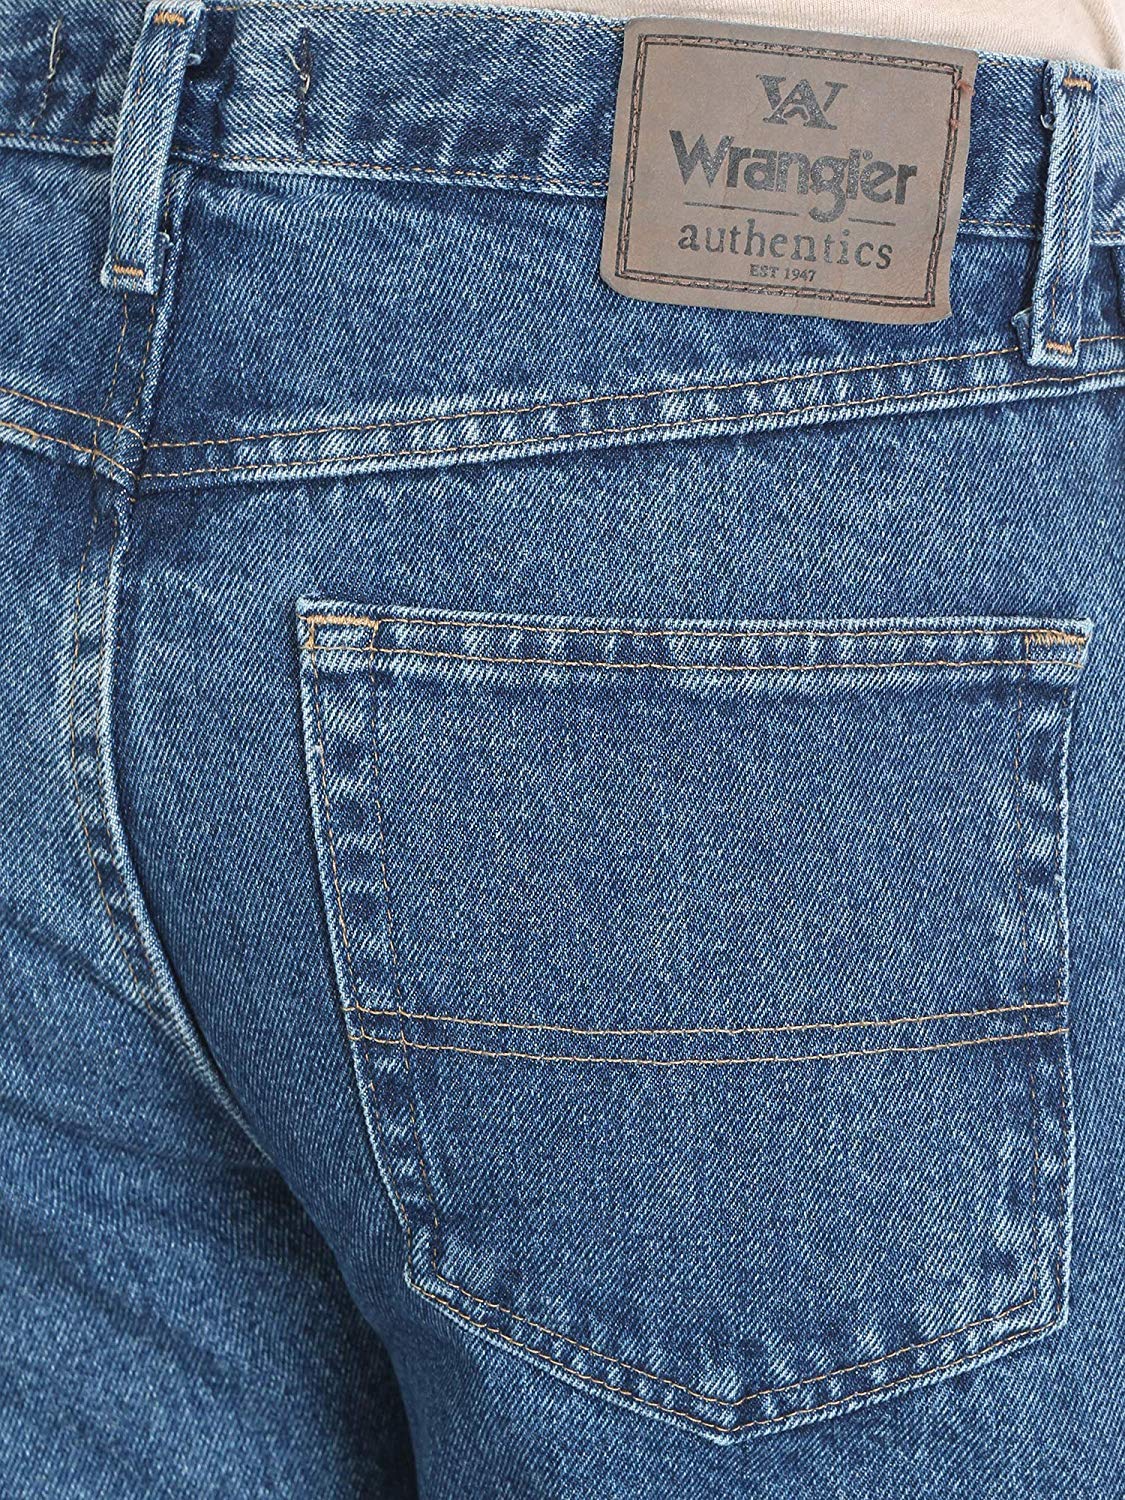 Wrangler Authentics Men's Classic 5-Pocket Regular Fit Cotton Jean, Stonewash Mid, 42W x 32L